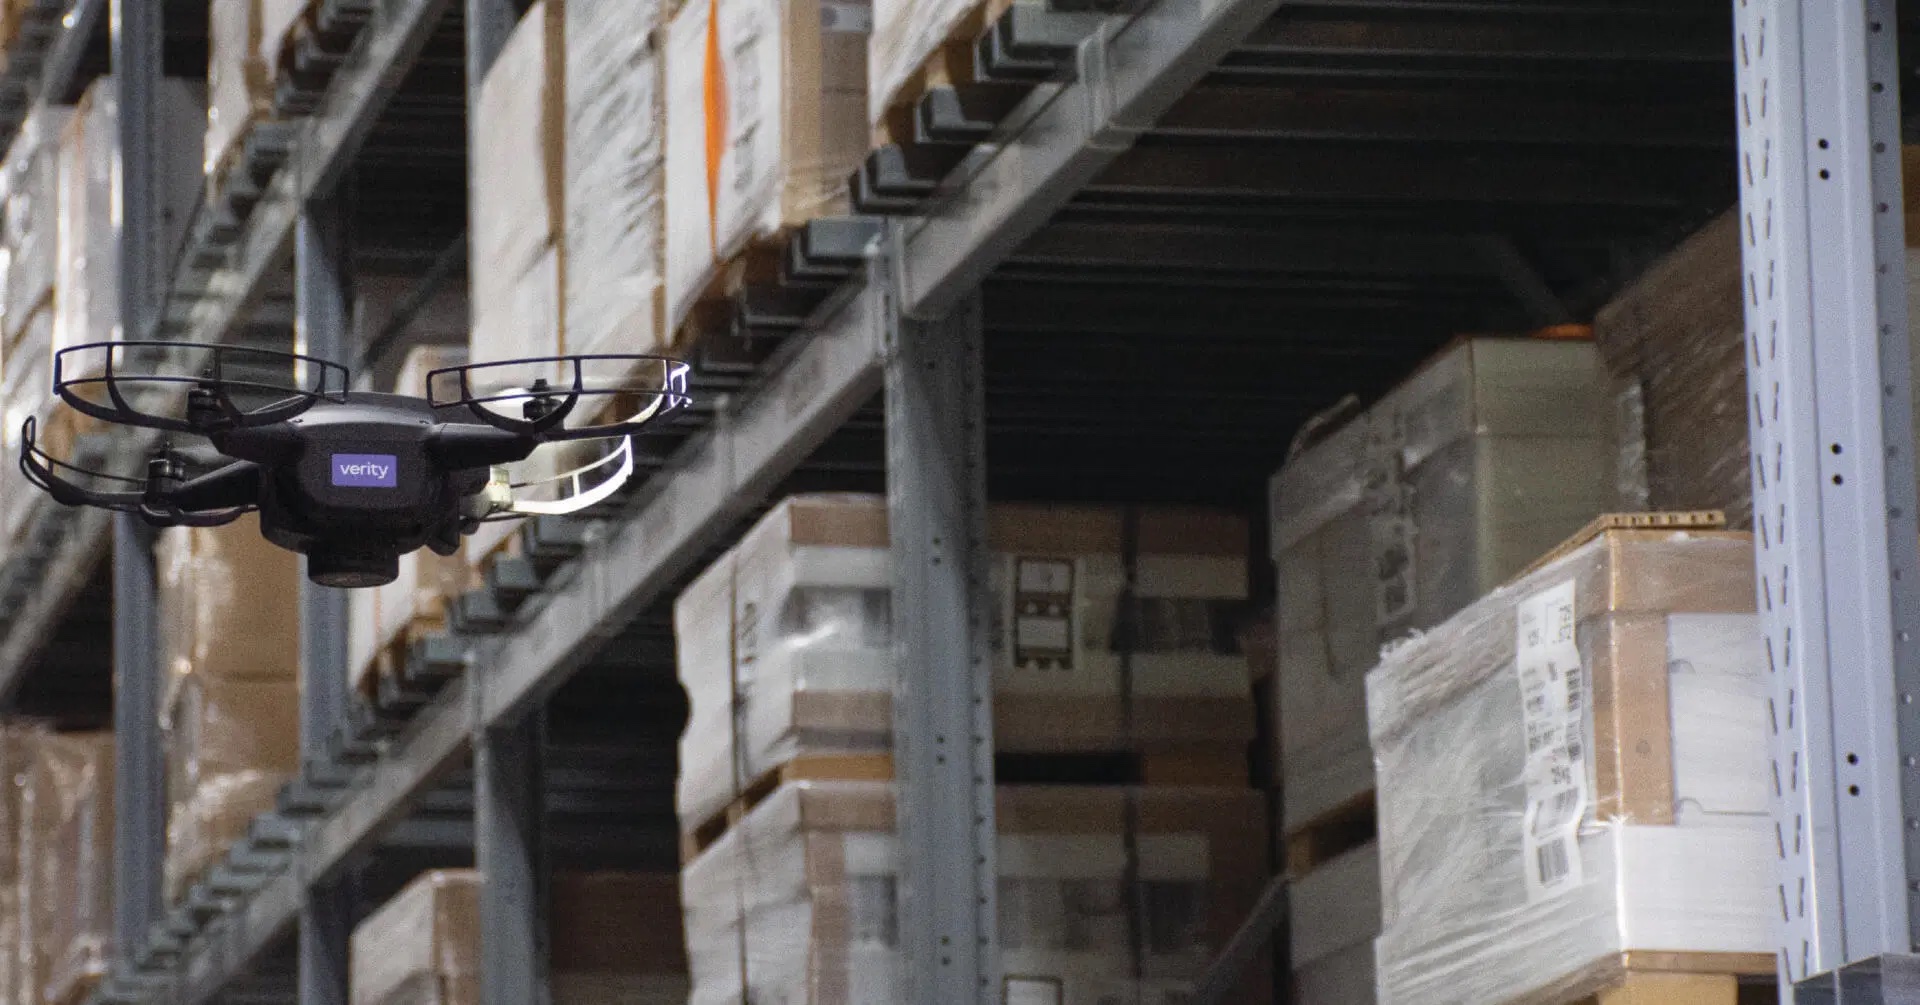 warehouse drone cruising the aisle